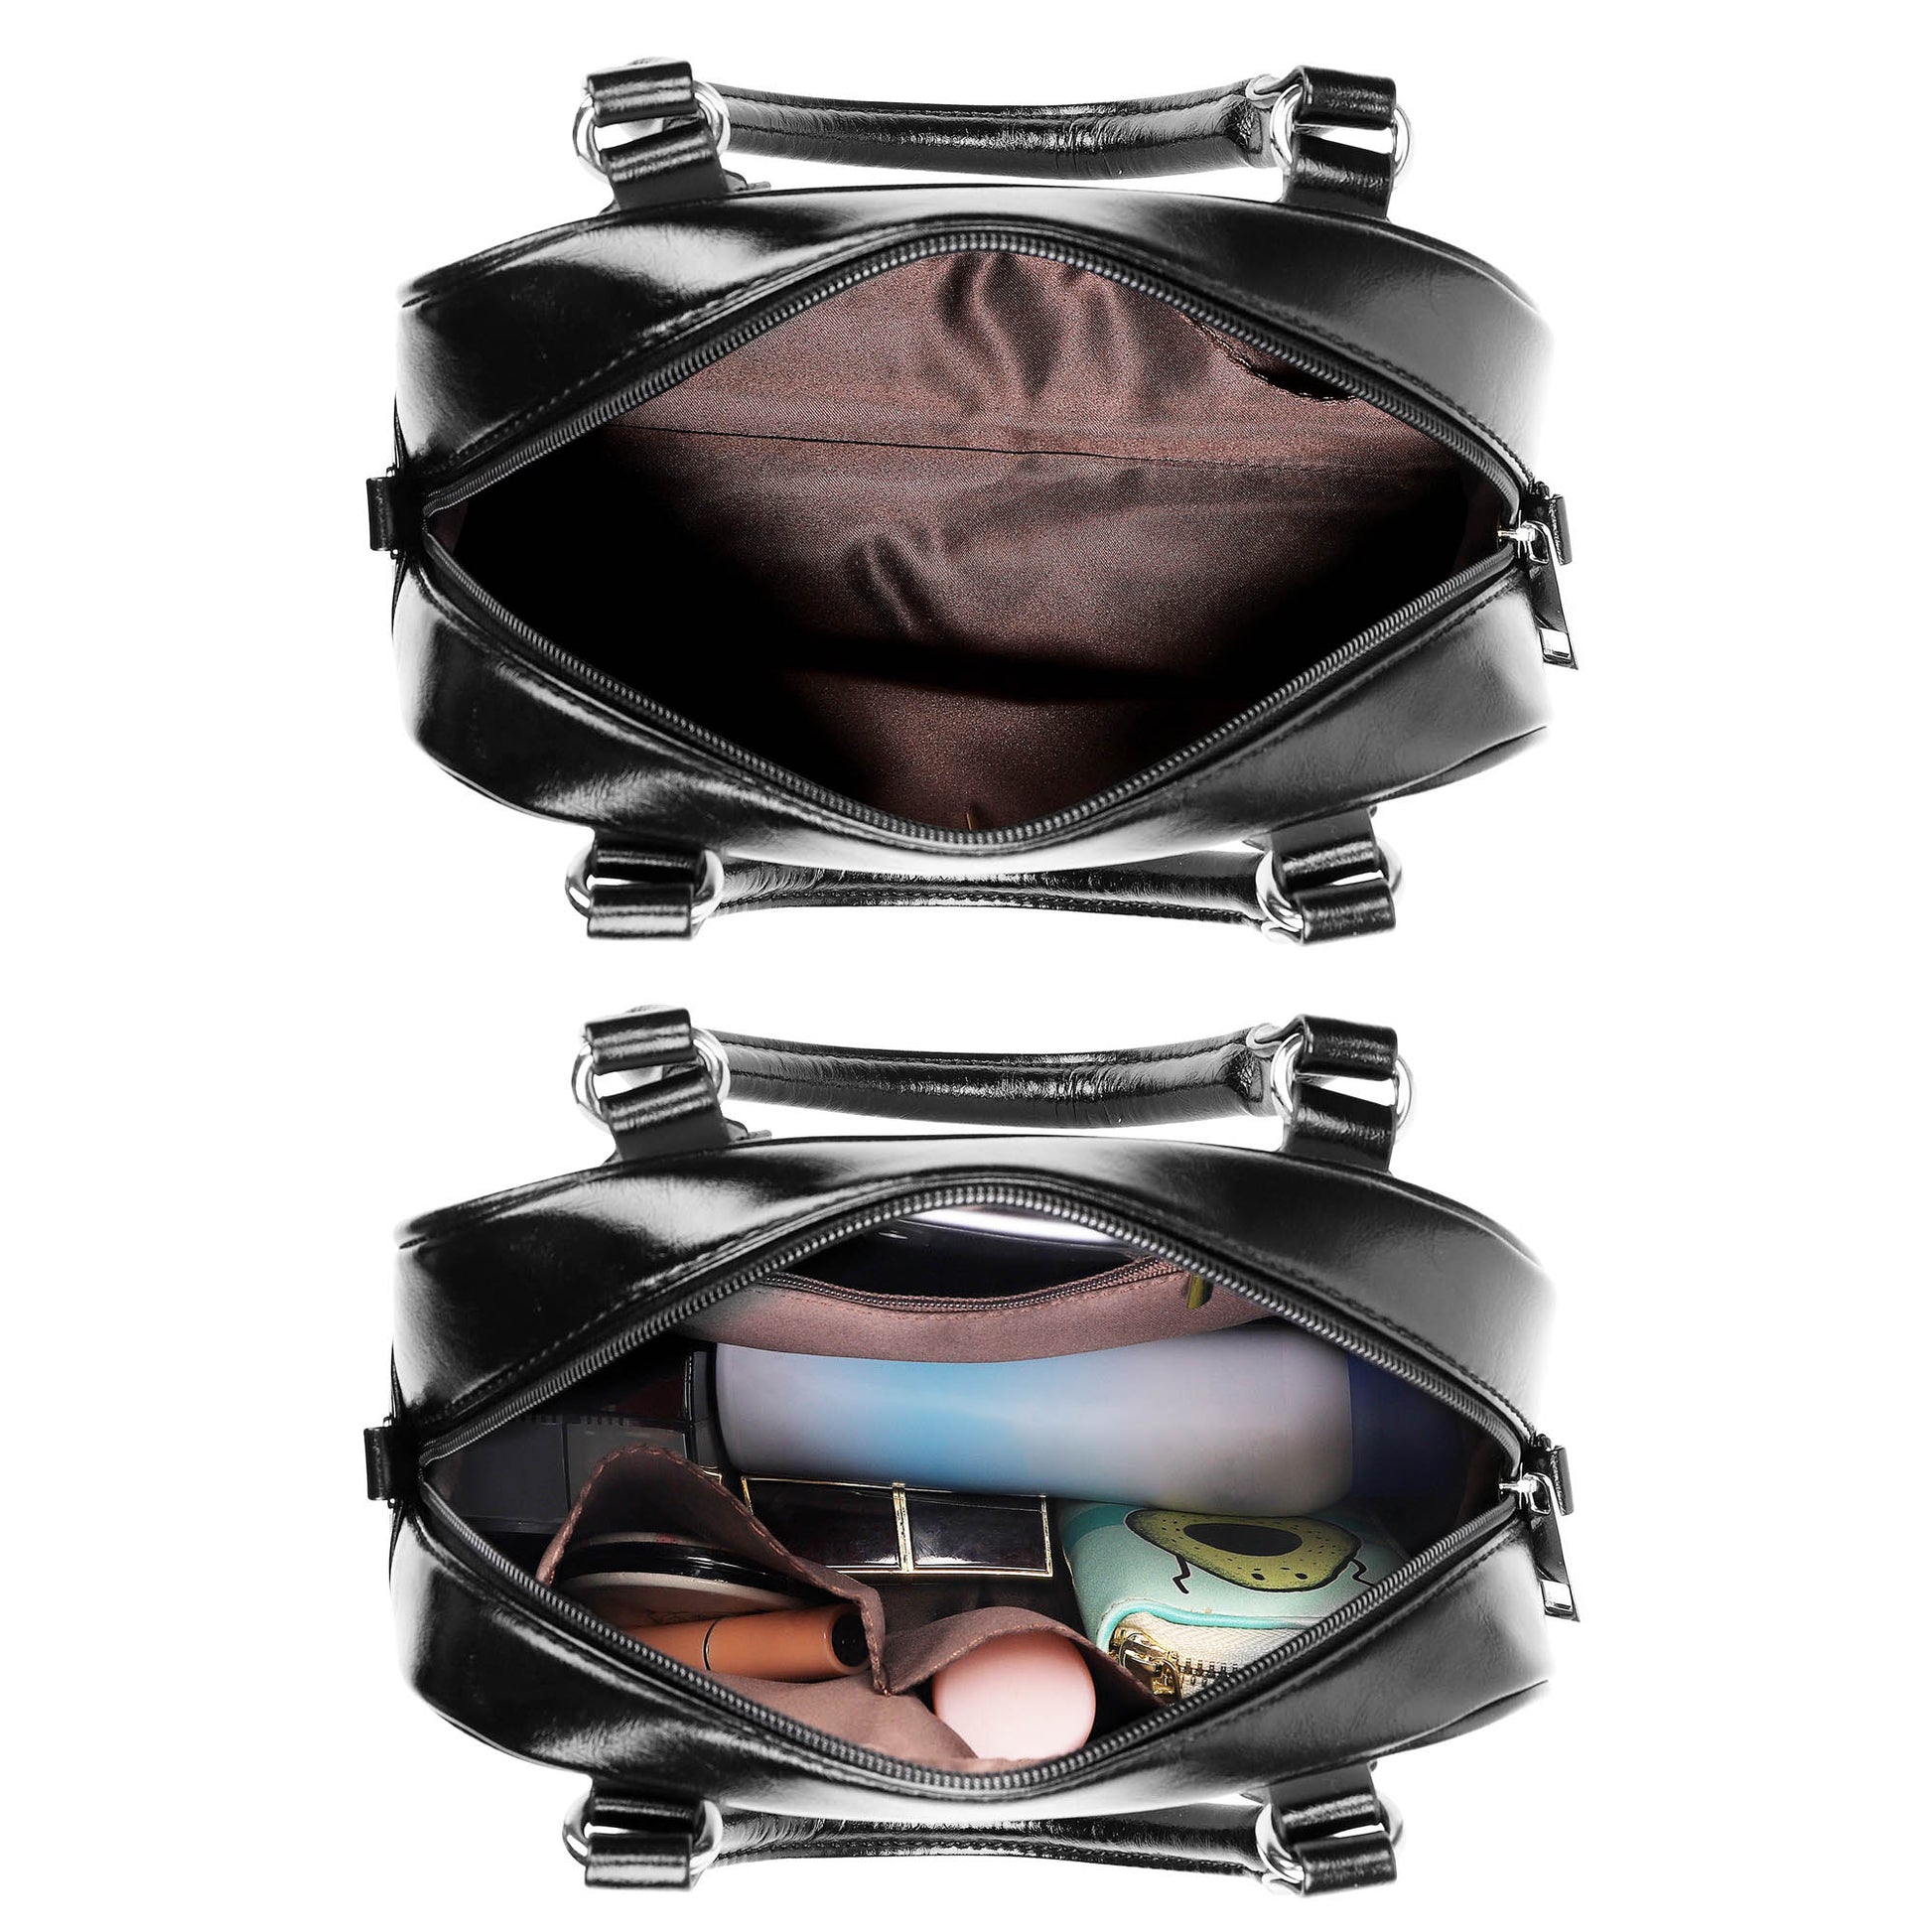 MacBean Tartan Shoulder Handbags with Family Crest - Tartanvibesclothing